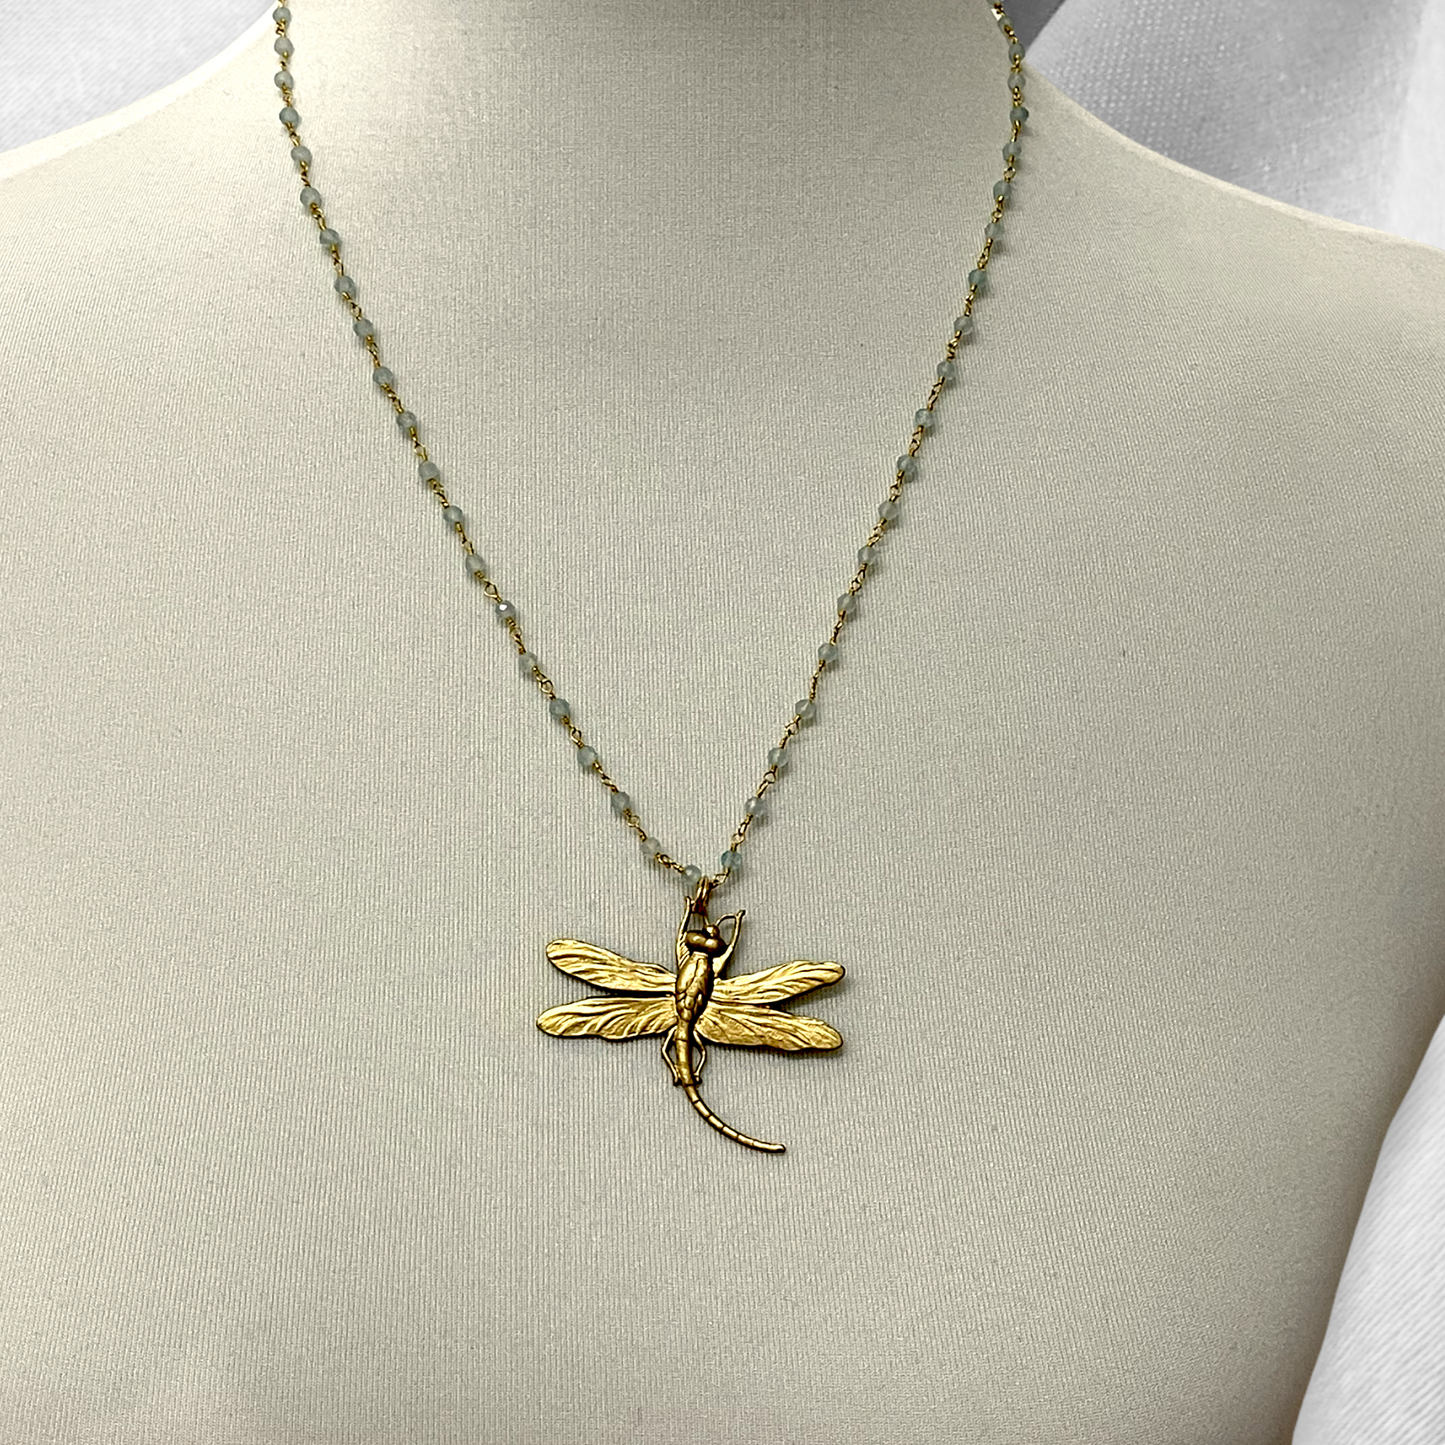 Aquamarine gemstone chain with dragonfly - gemstone jewelry - VIK-116